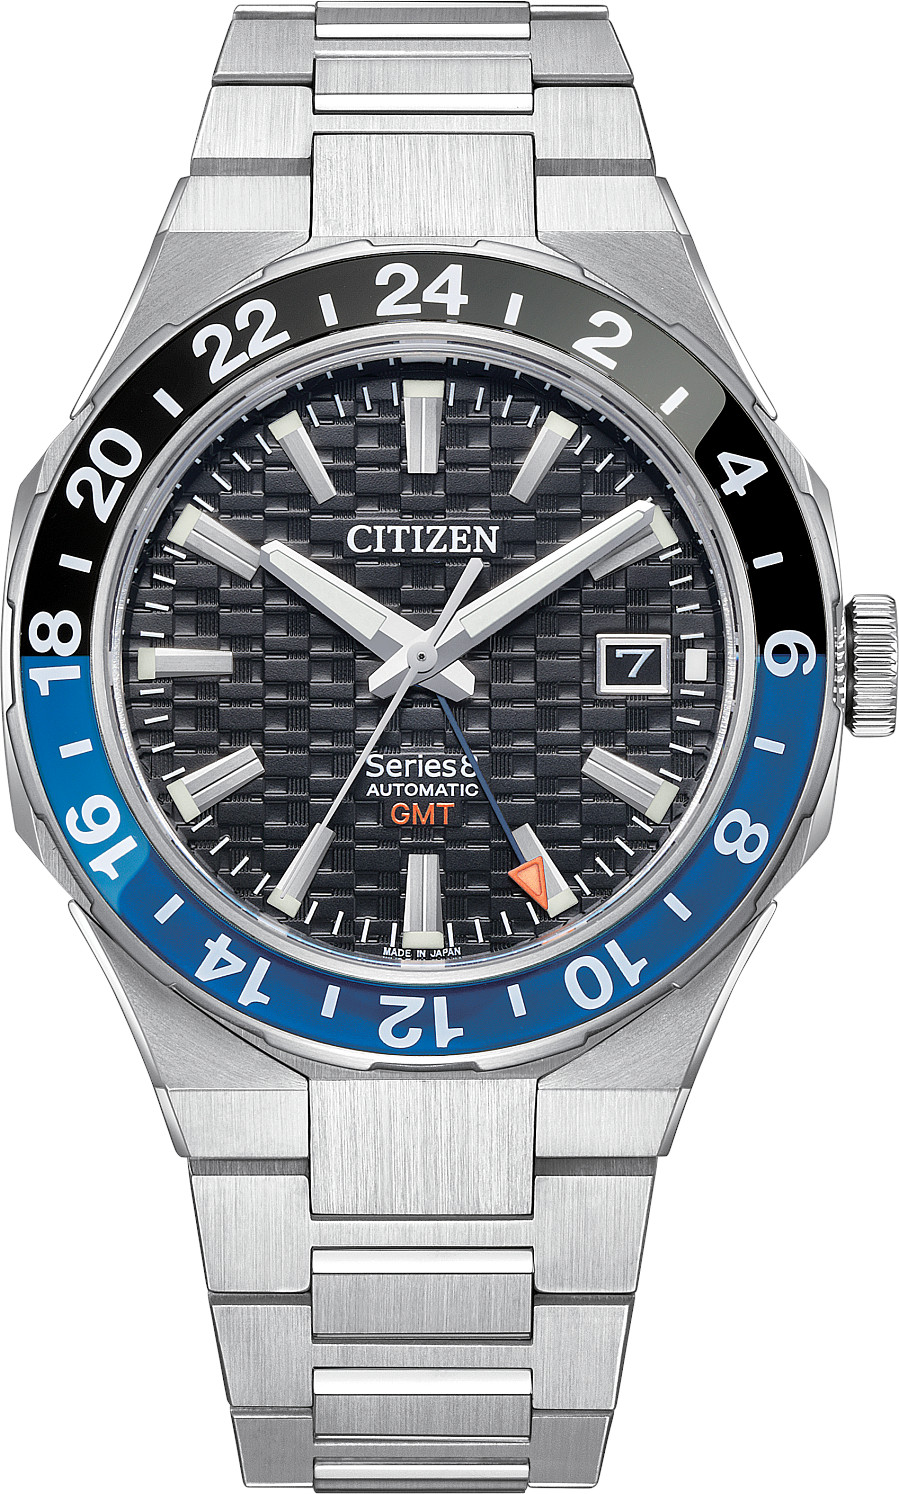 Citizen Series 8 GMT Automatic NB6031-56E